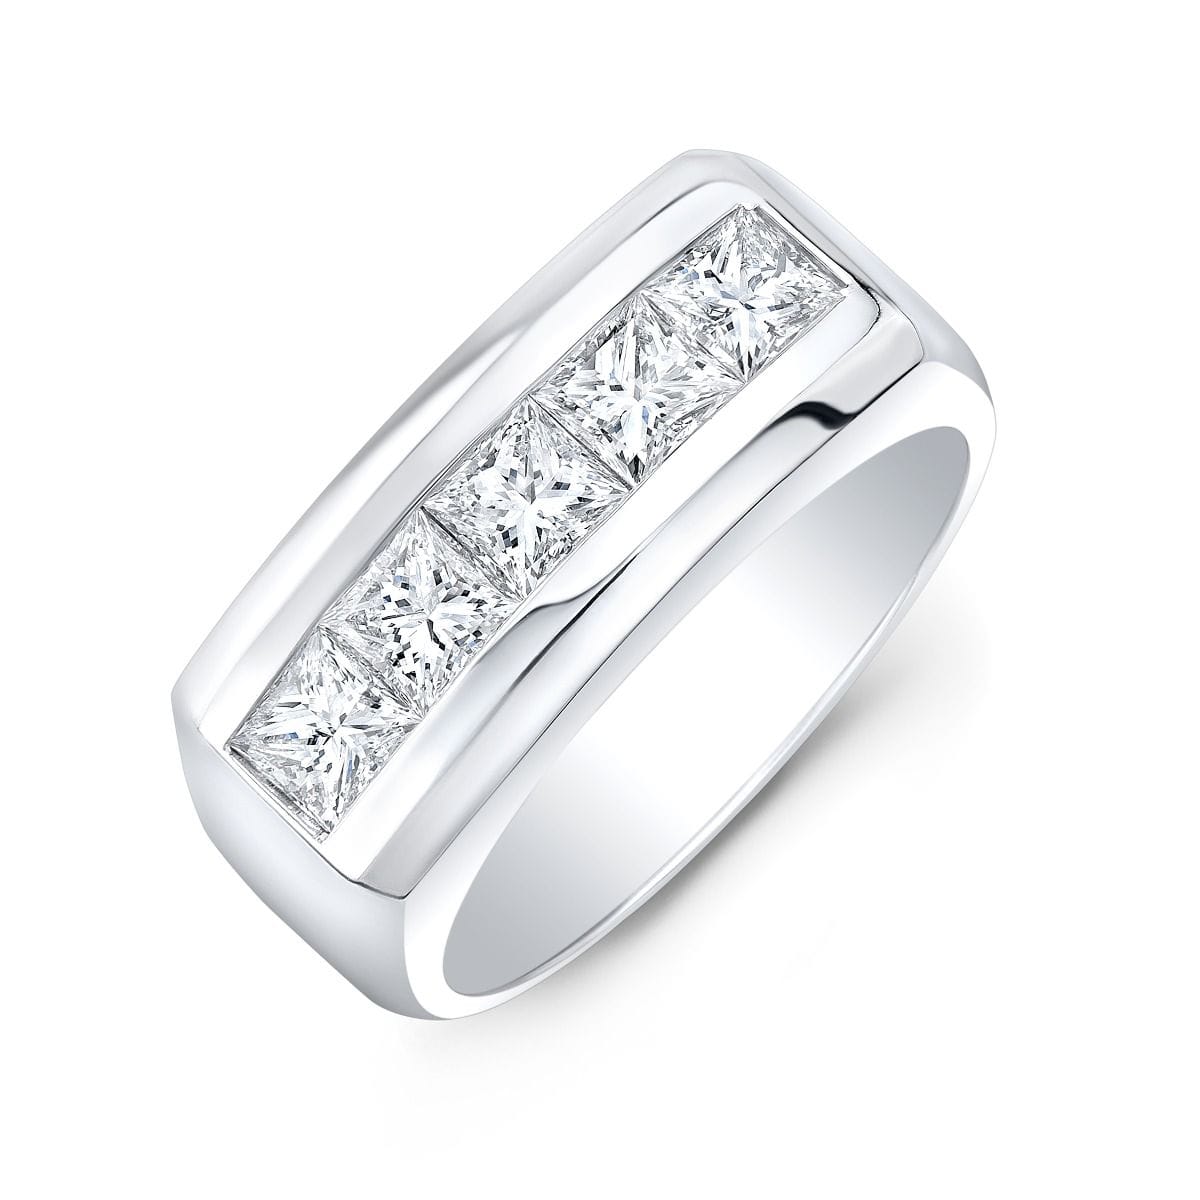 Diamond Ring 001-135-00042 - Men's Rings | Georgetown Jewelers | Wood Dale,  IL